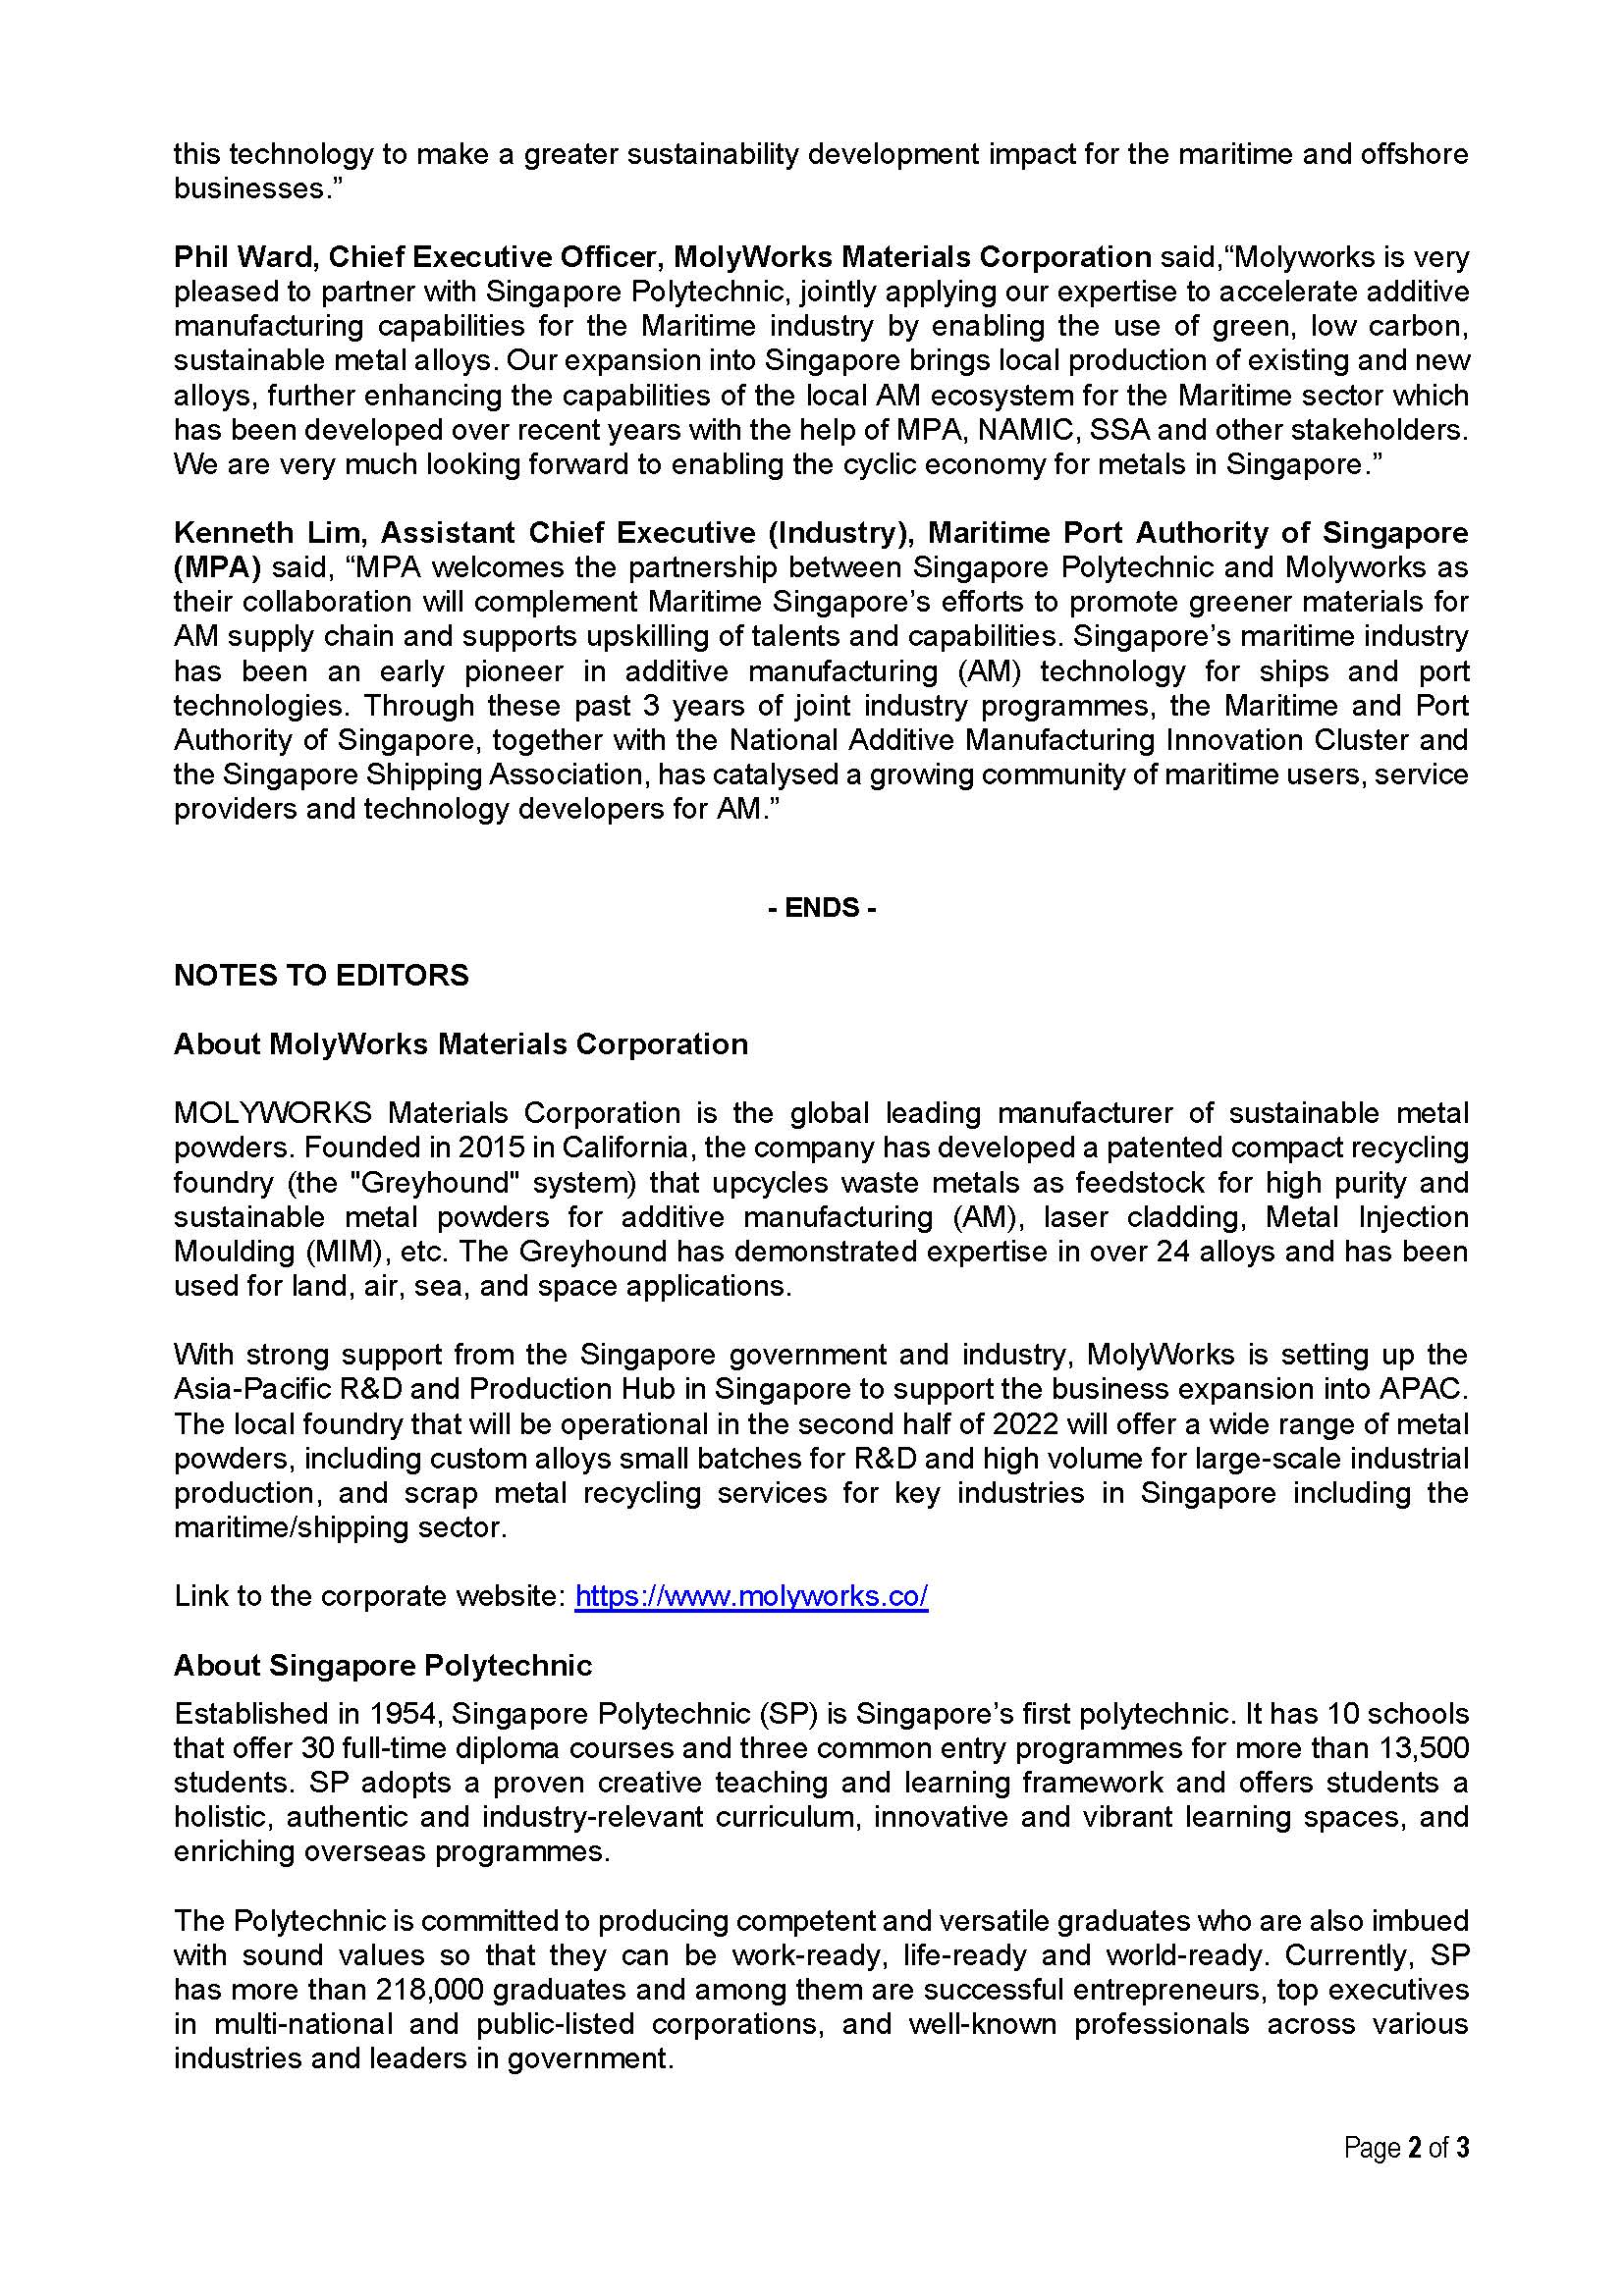 Press_Release_Singapore Polytechnic_MolyWorks_MoU_5Apr2022 (002)_Page_2